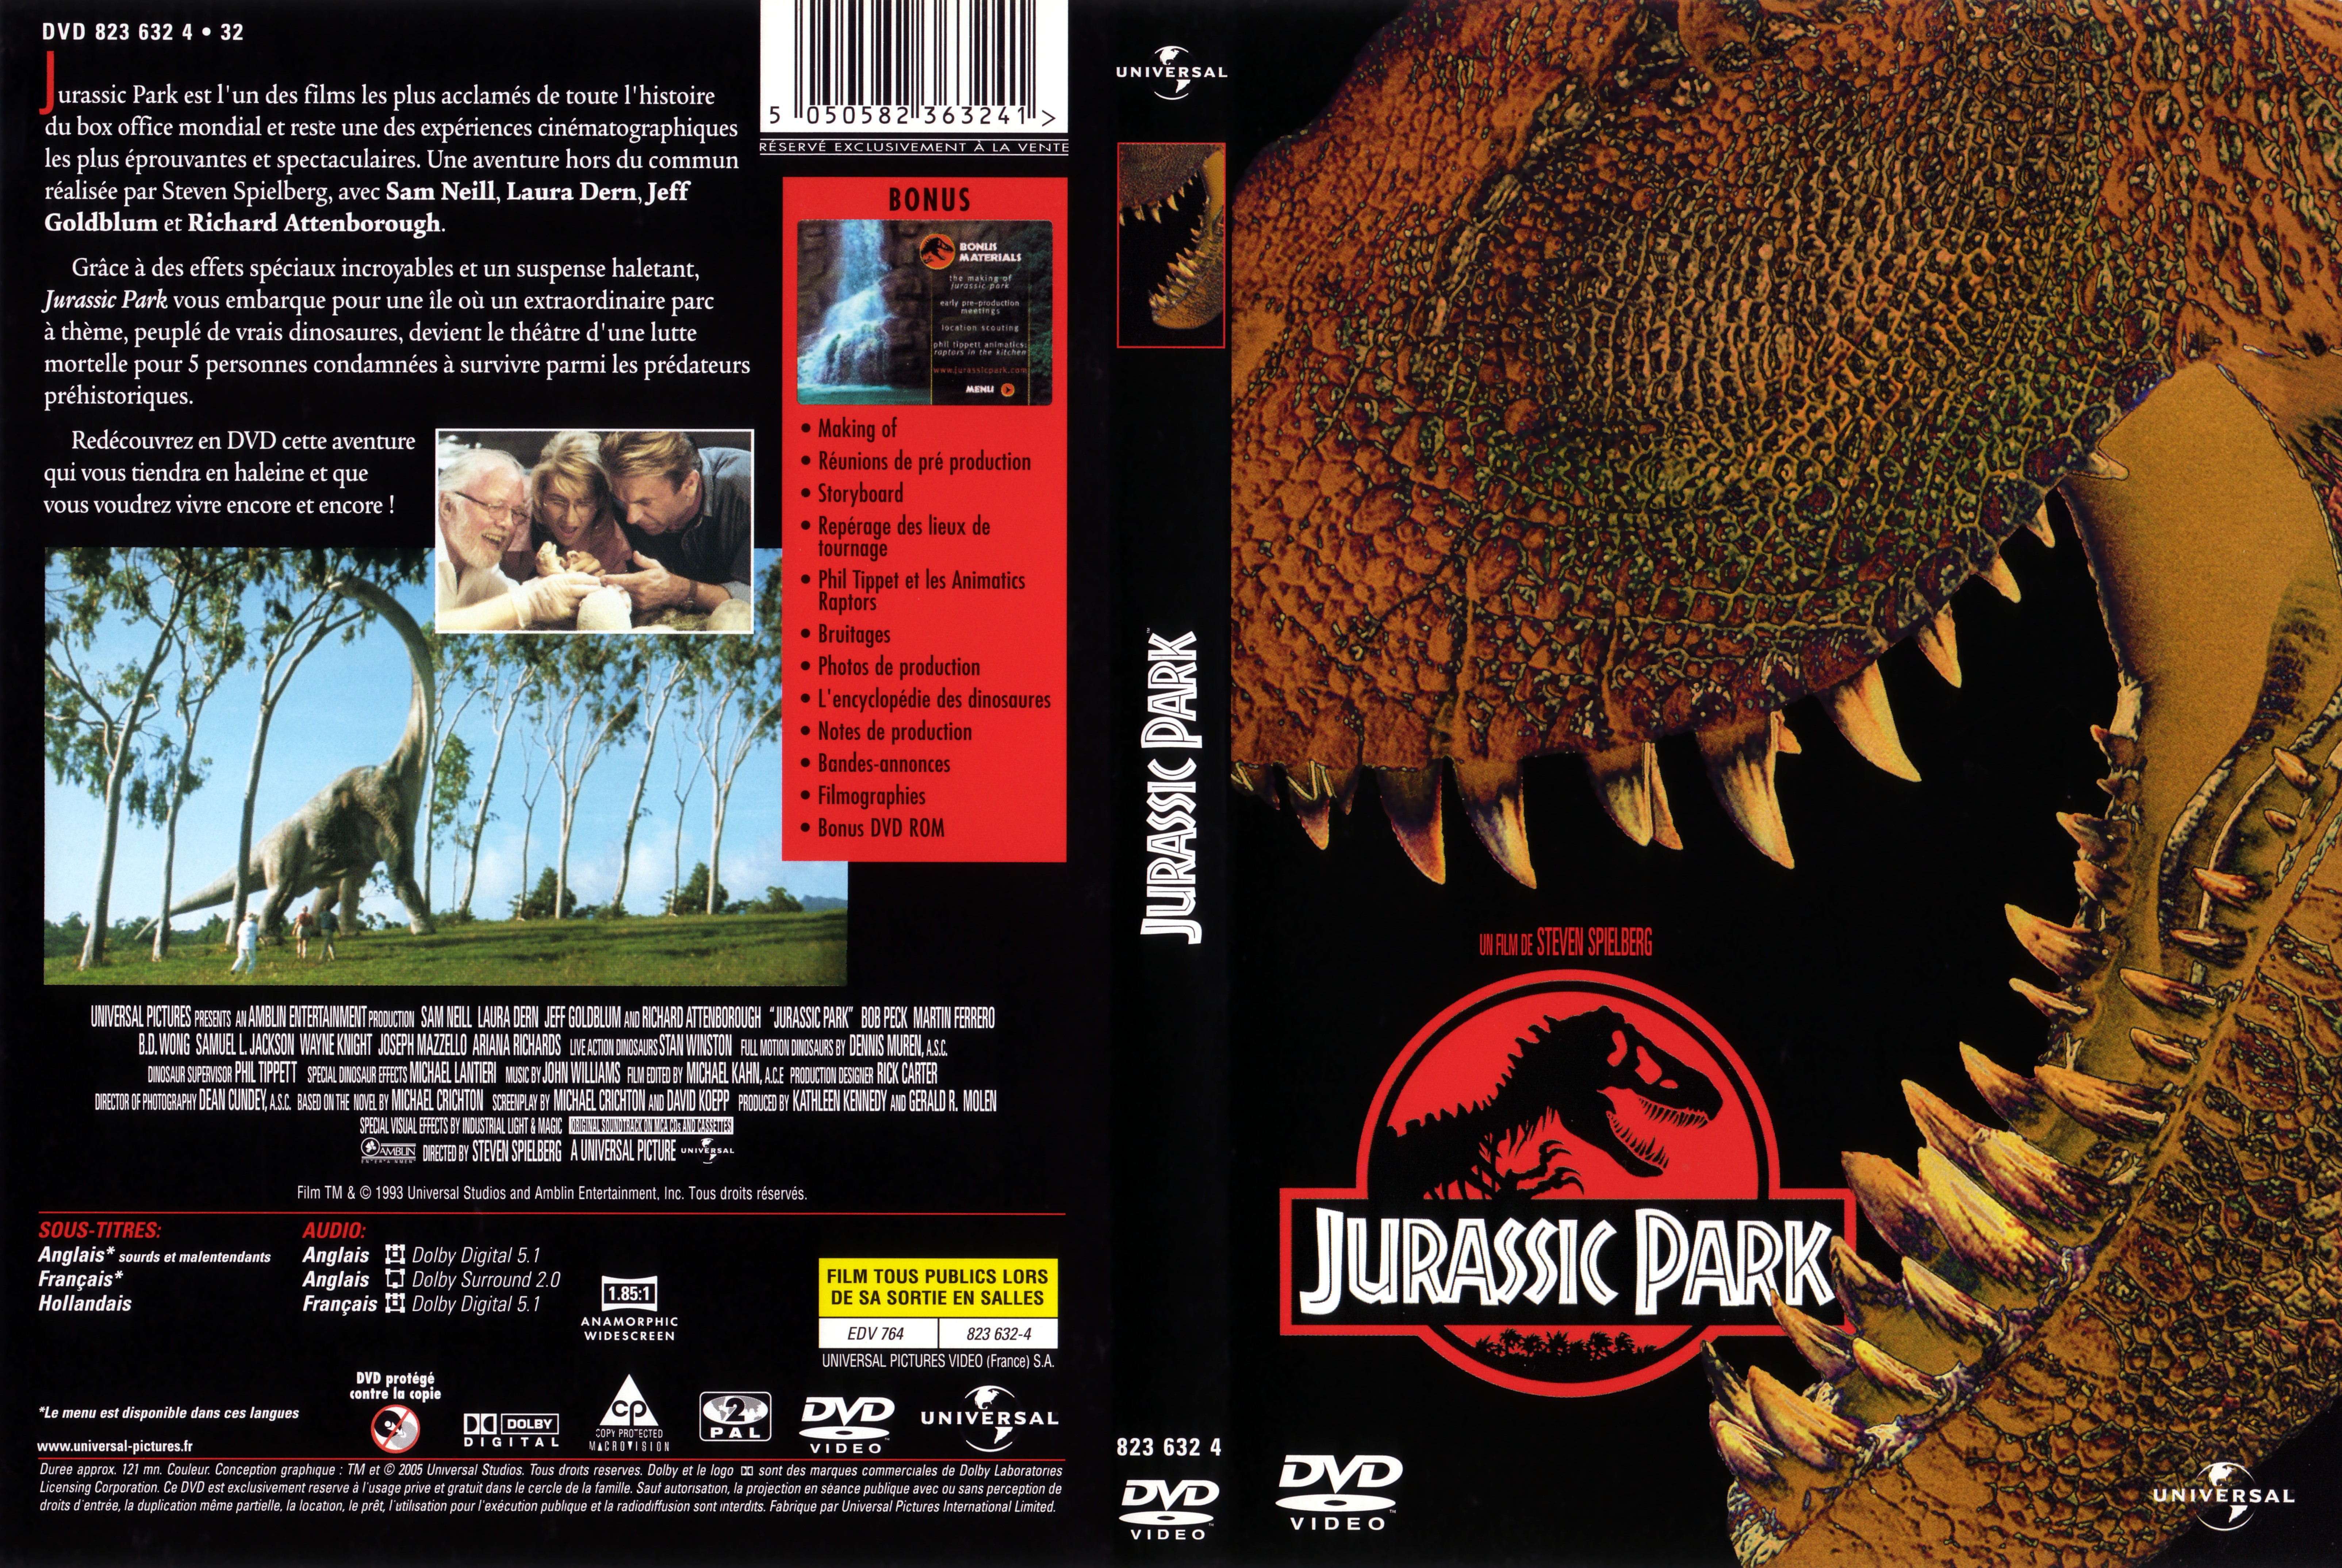 Jaquette DVD Jurassic park v2